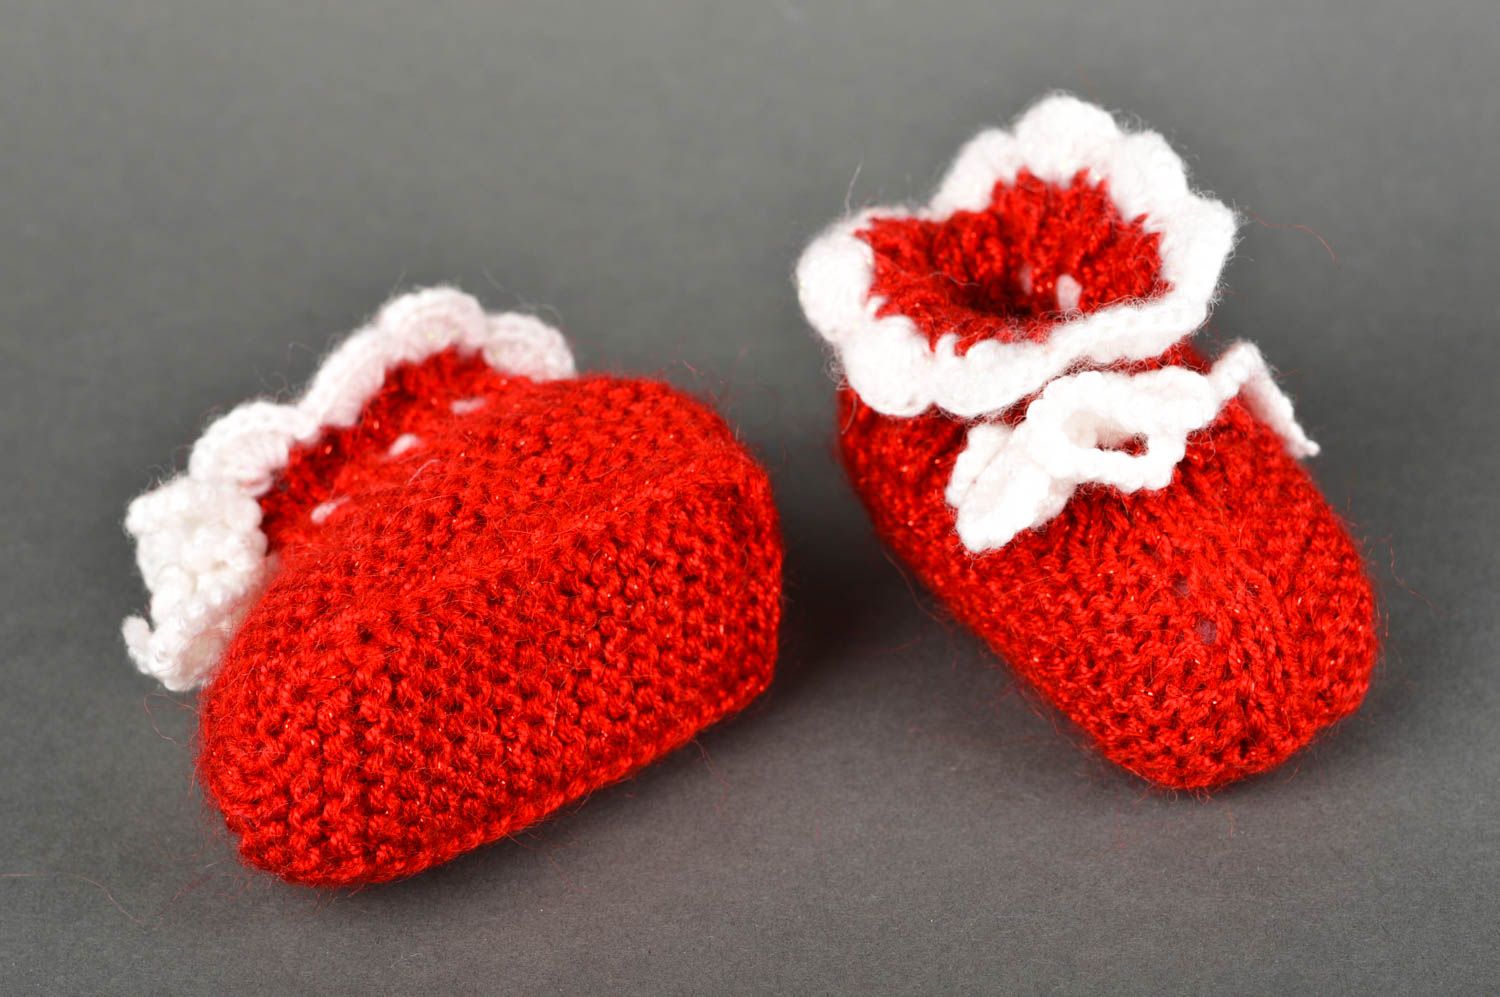 Cute handmade baby booties crochet ideas fashion baby accessories warm socks photo 5